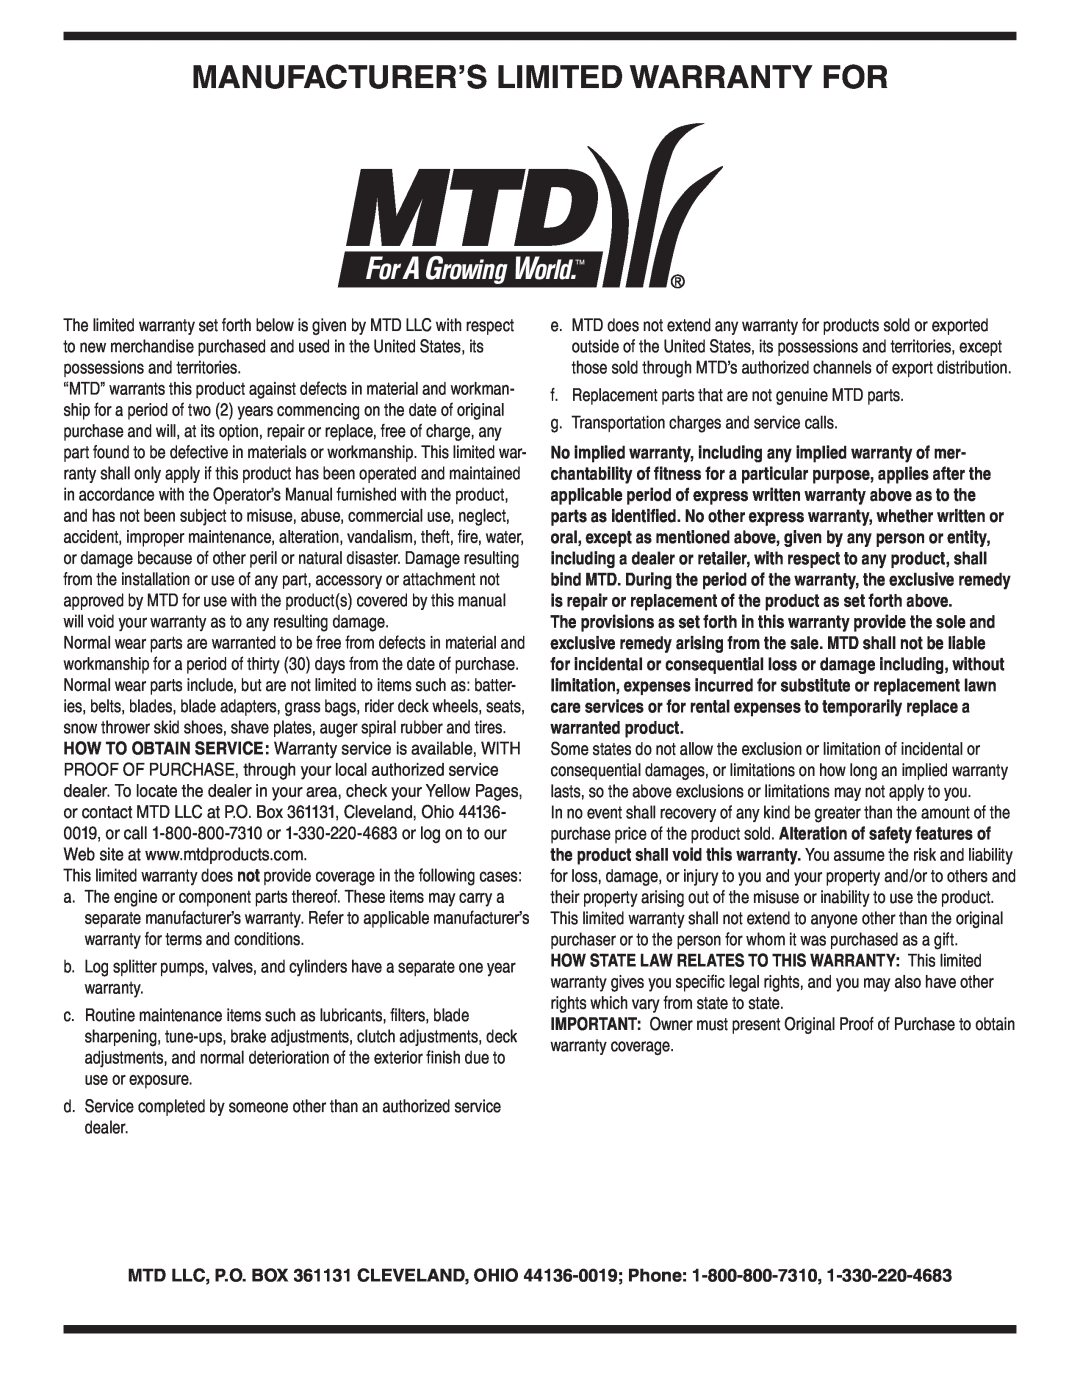 MTD 38 warranty Manufacturer’S Limited Warranty For 